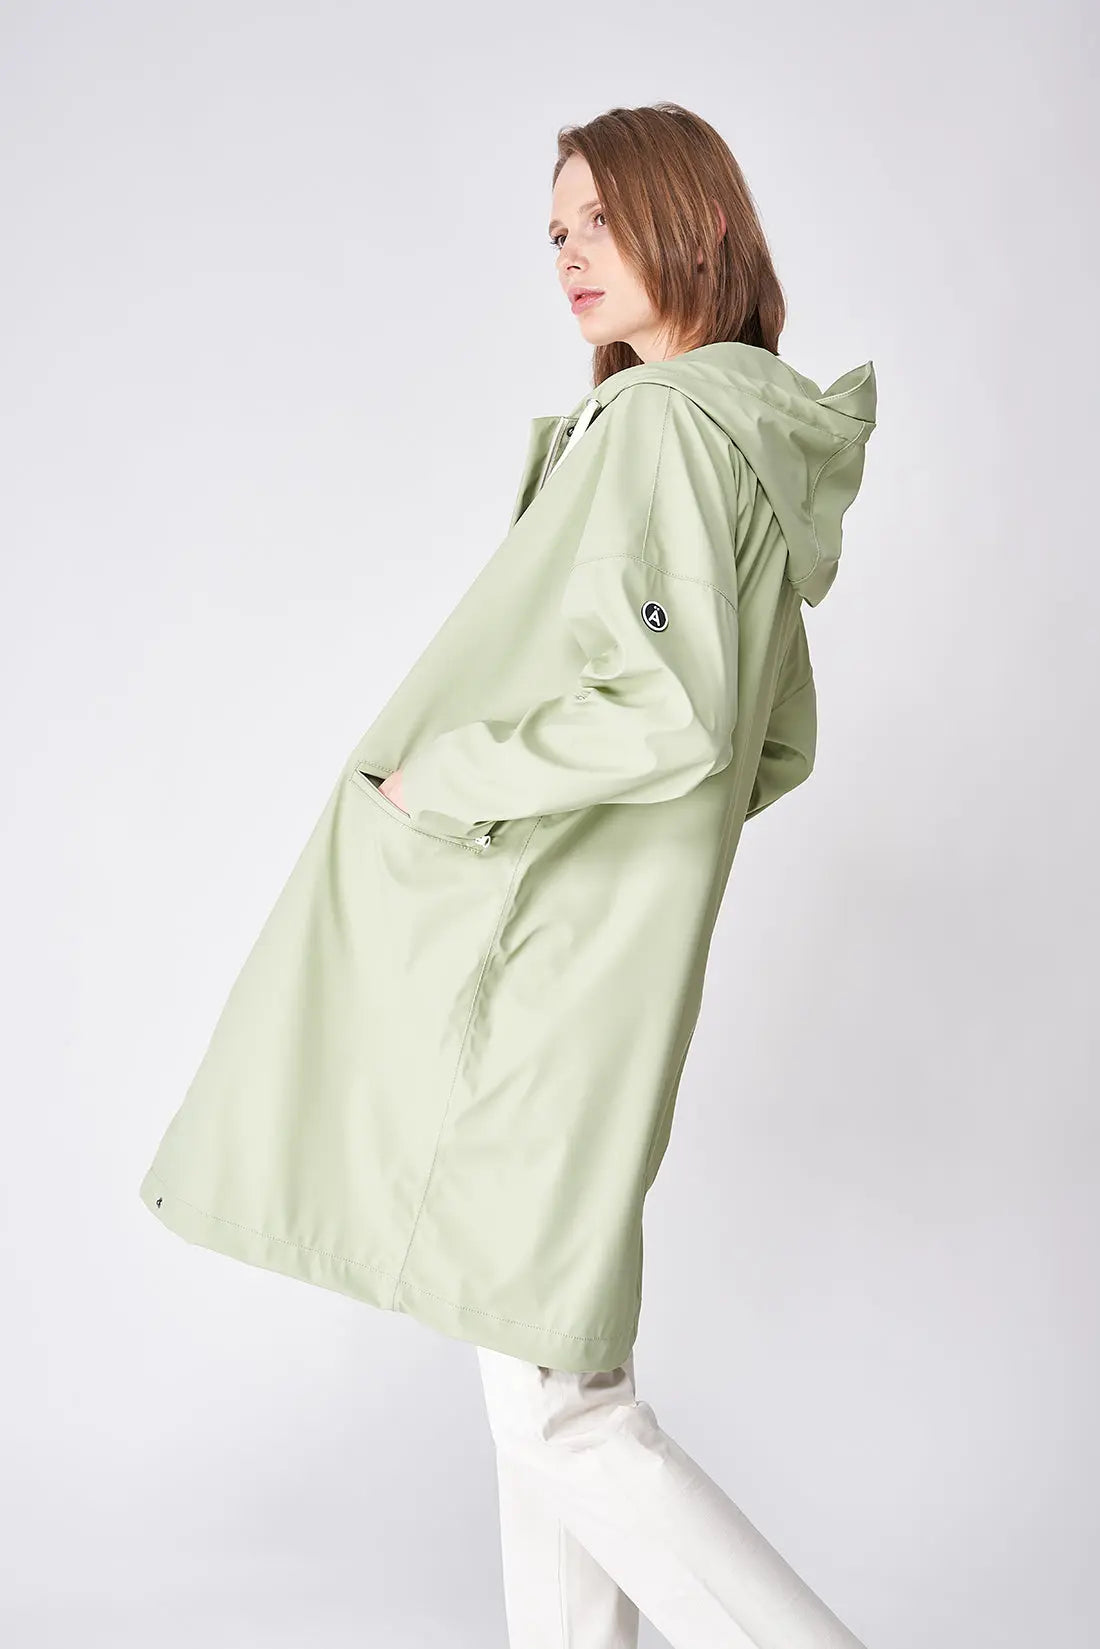 Betsy Trotwood India Agotar Tantä. Chubasquero o chaqueta Impermeable de Mujer – Tantä Rainwear